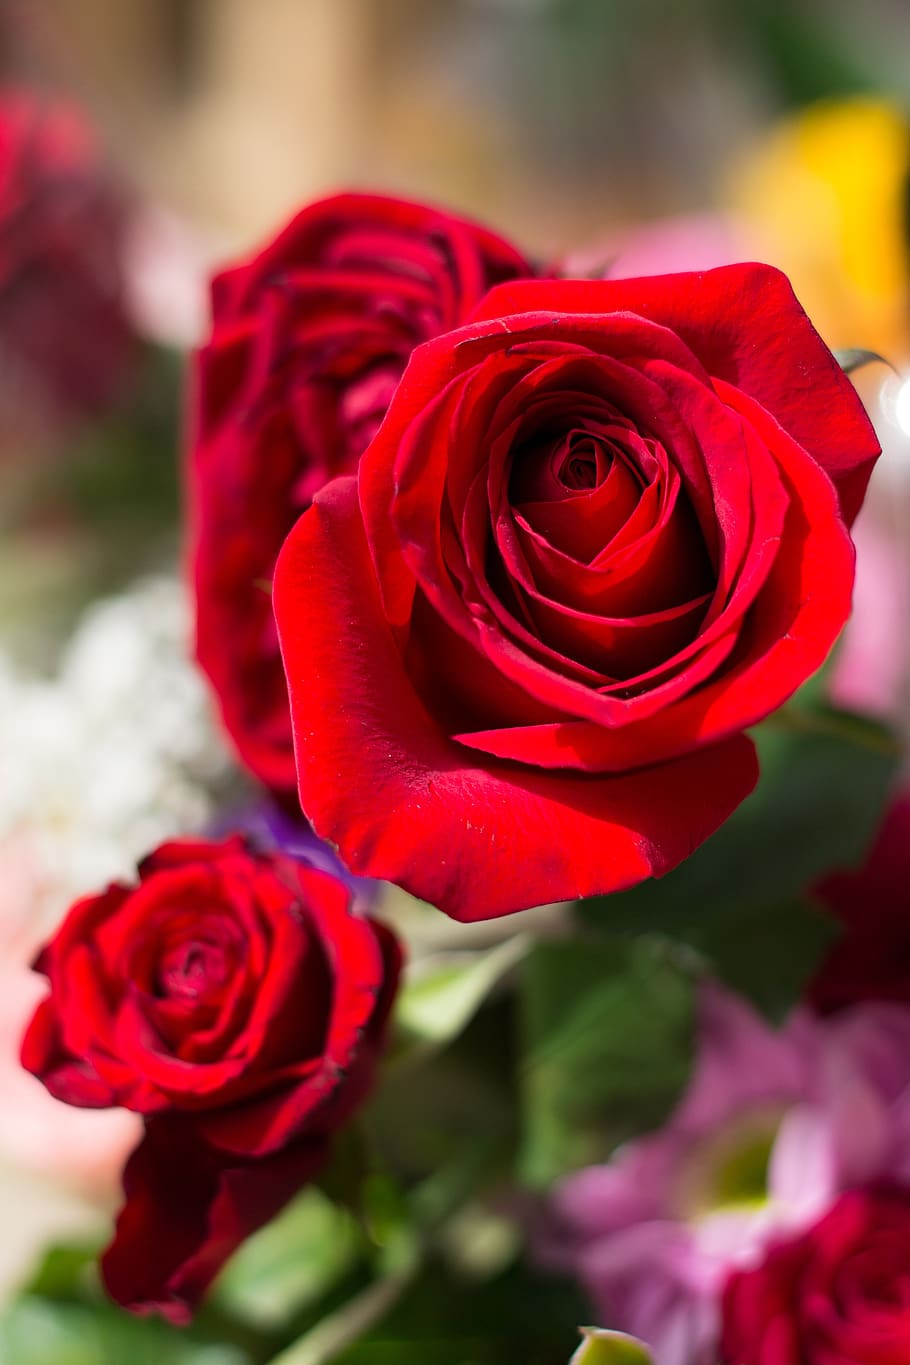 mawar merah, ro, bunga, alam, tanaman berbunga, mawar, mawar - bunga, keindahan di alam, merah, kerentanan